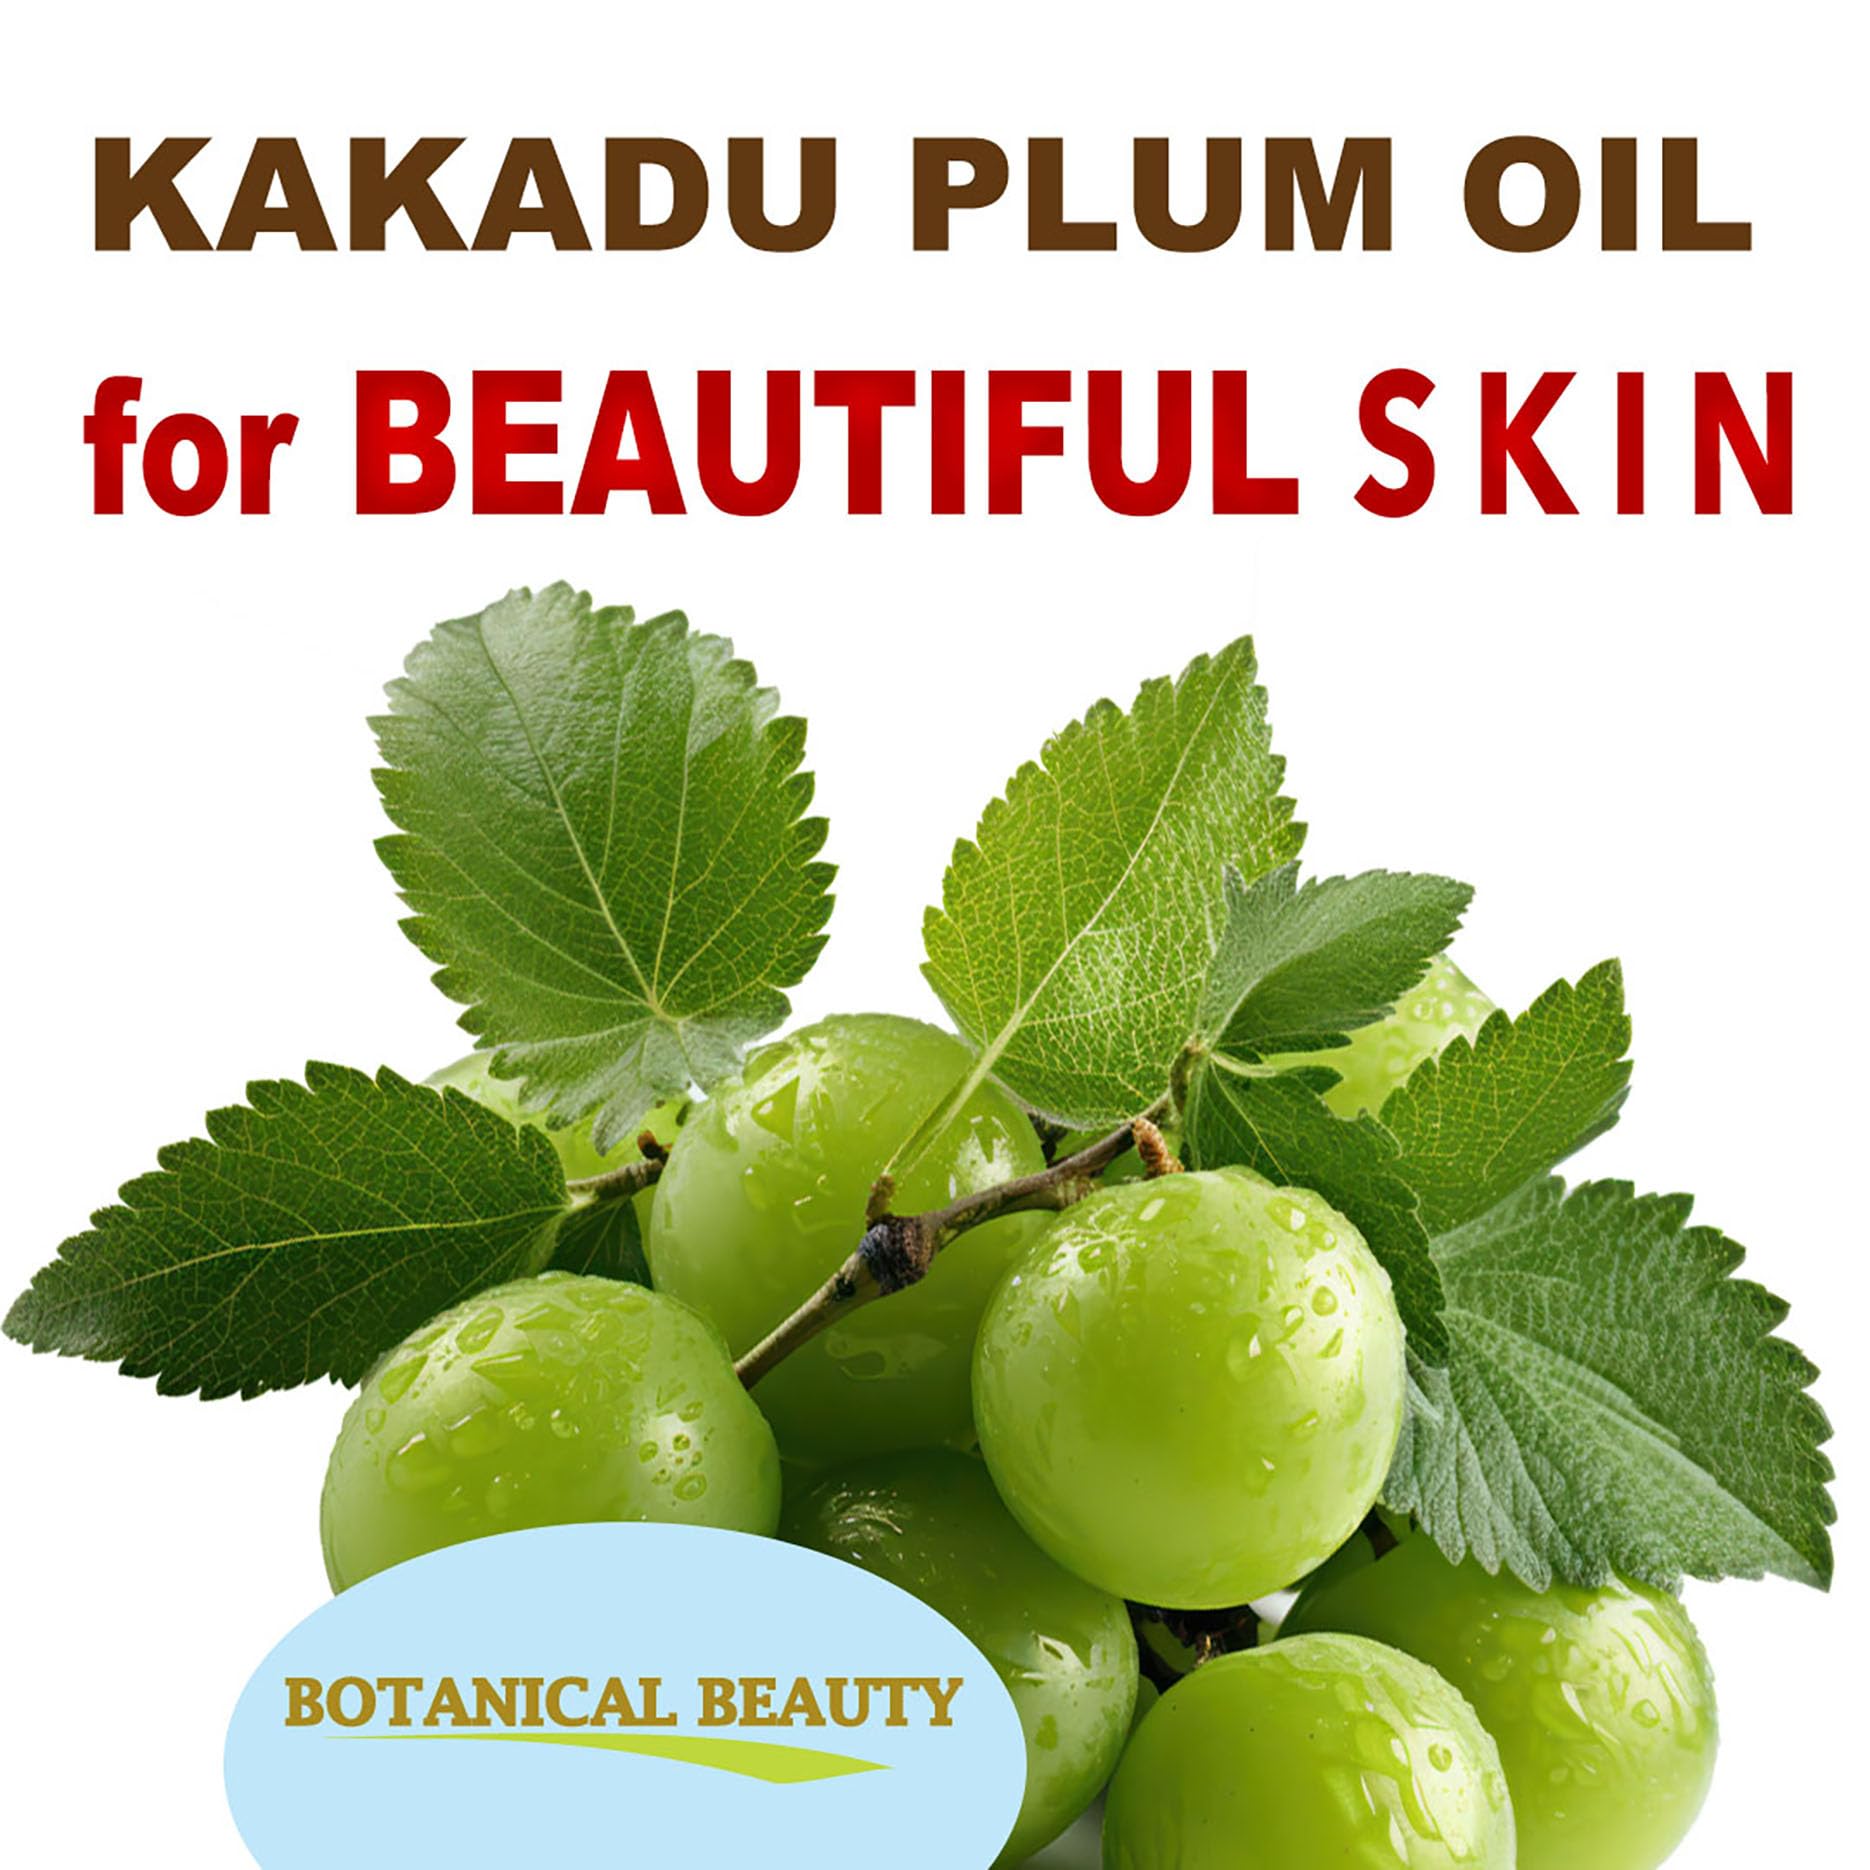 Botanical Beauty Australian KAKADU PLUM OIL 100% Pure Natural Virgin Unrefined Cold-pressed carrier oil 2 Fl oz 60 ml For Face, Skin, Body, Hair, Lip, Nails. Rich in vitamin C